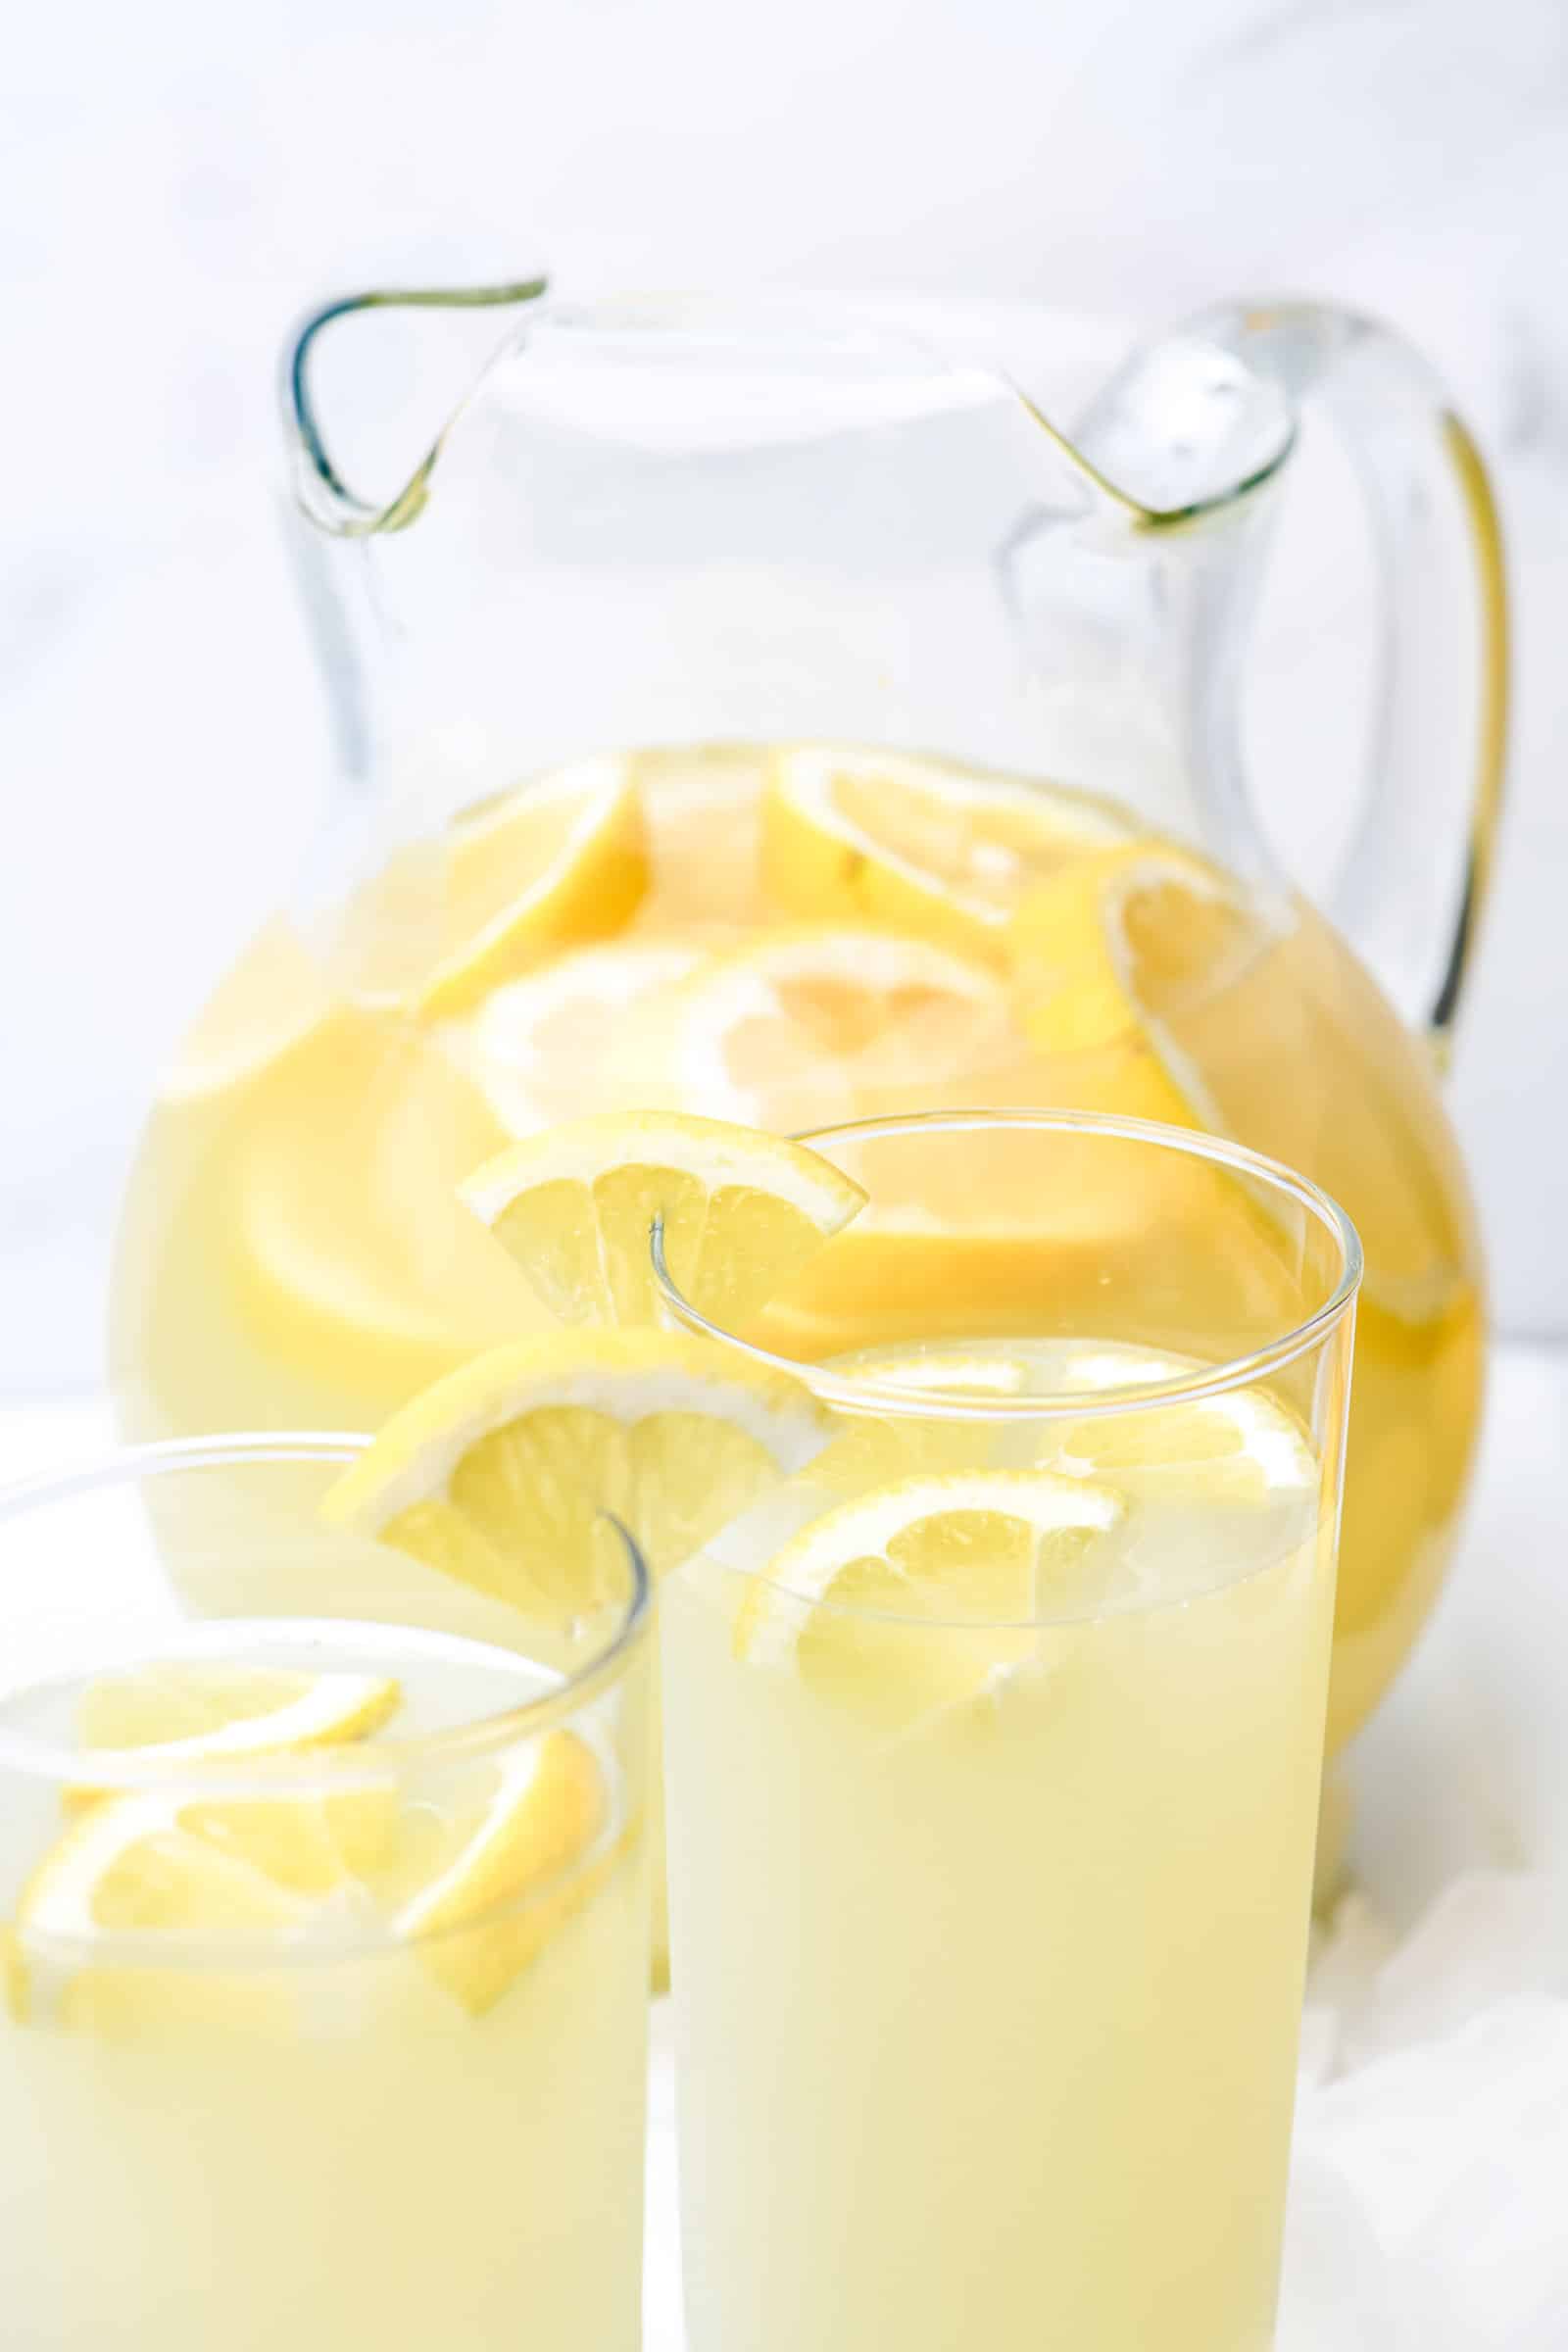 Lemonade. Glass jug with lemonade and lemon slices on a white